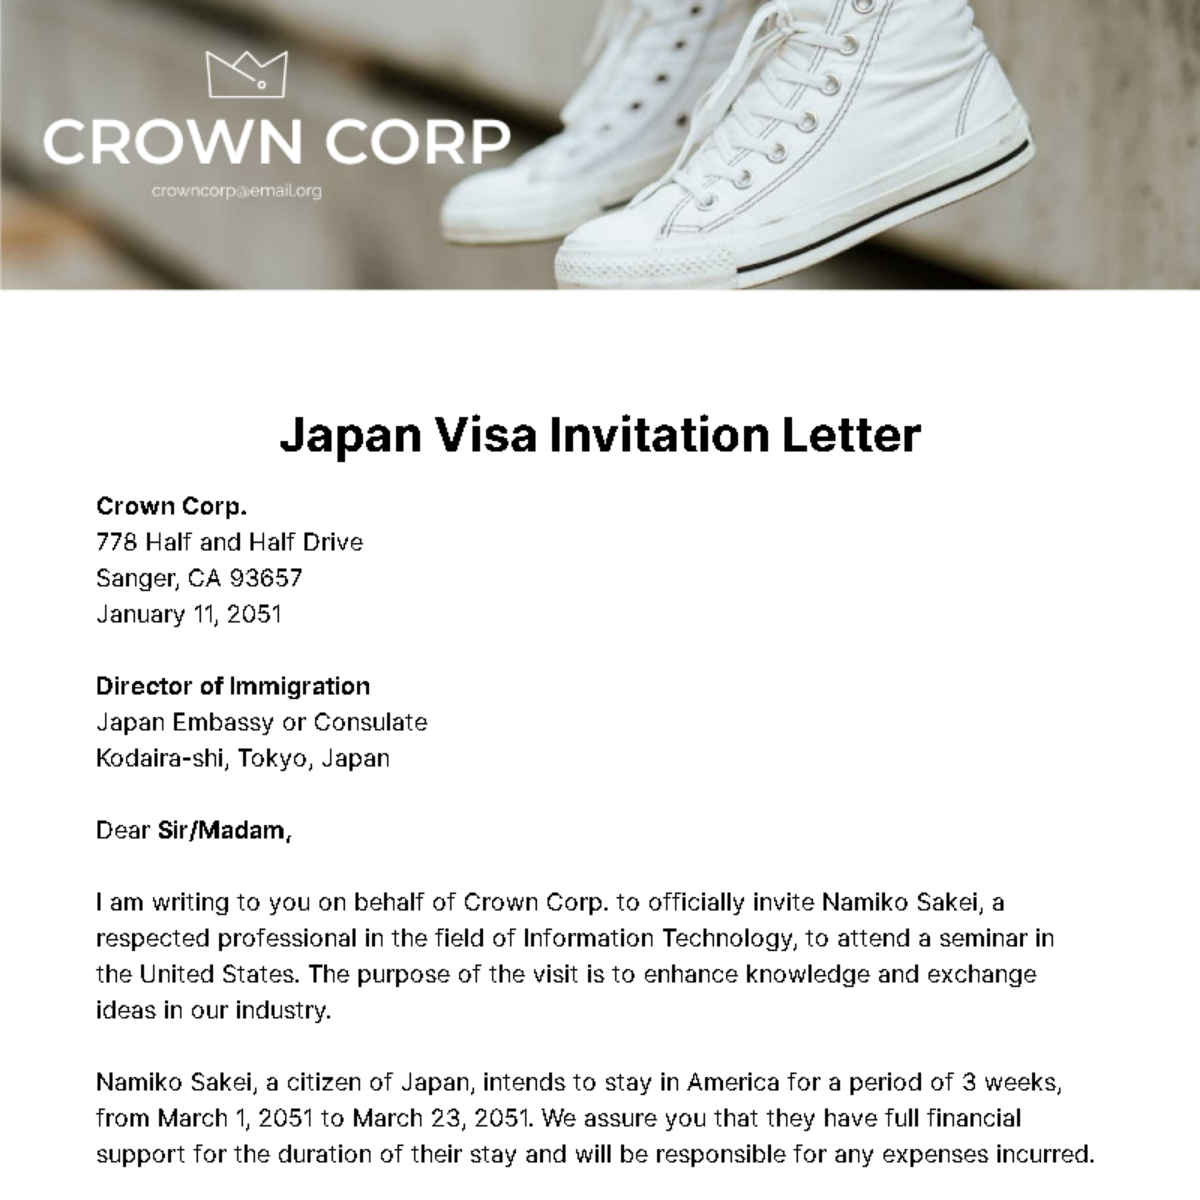 Japan Visa Invitation Letter Template